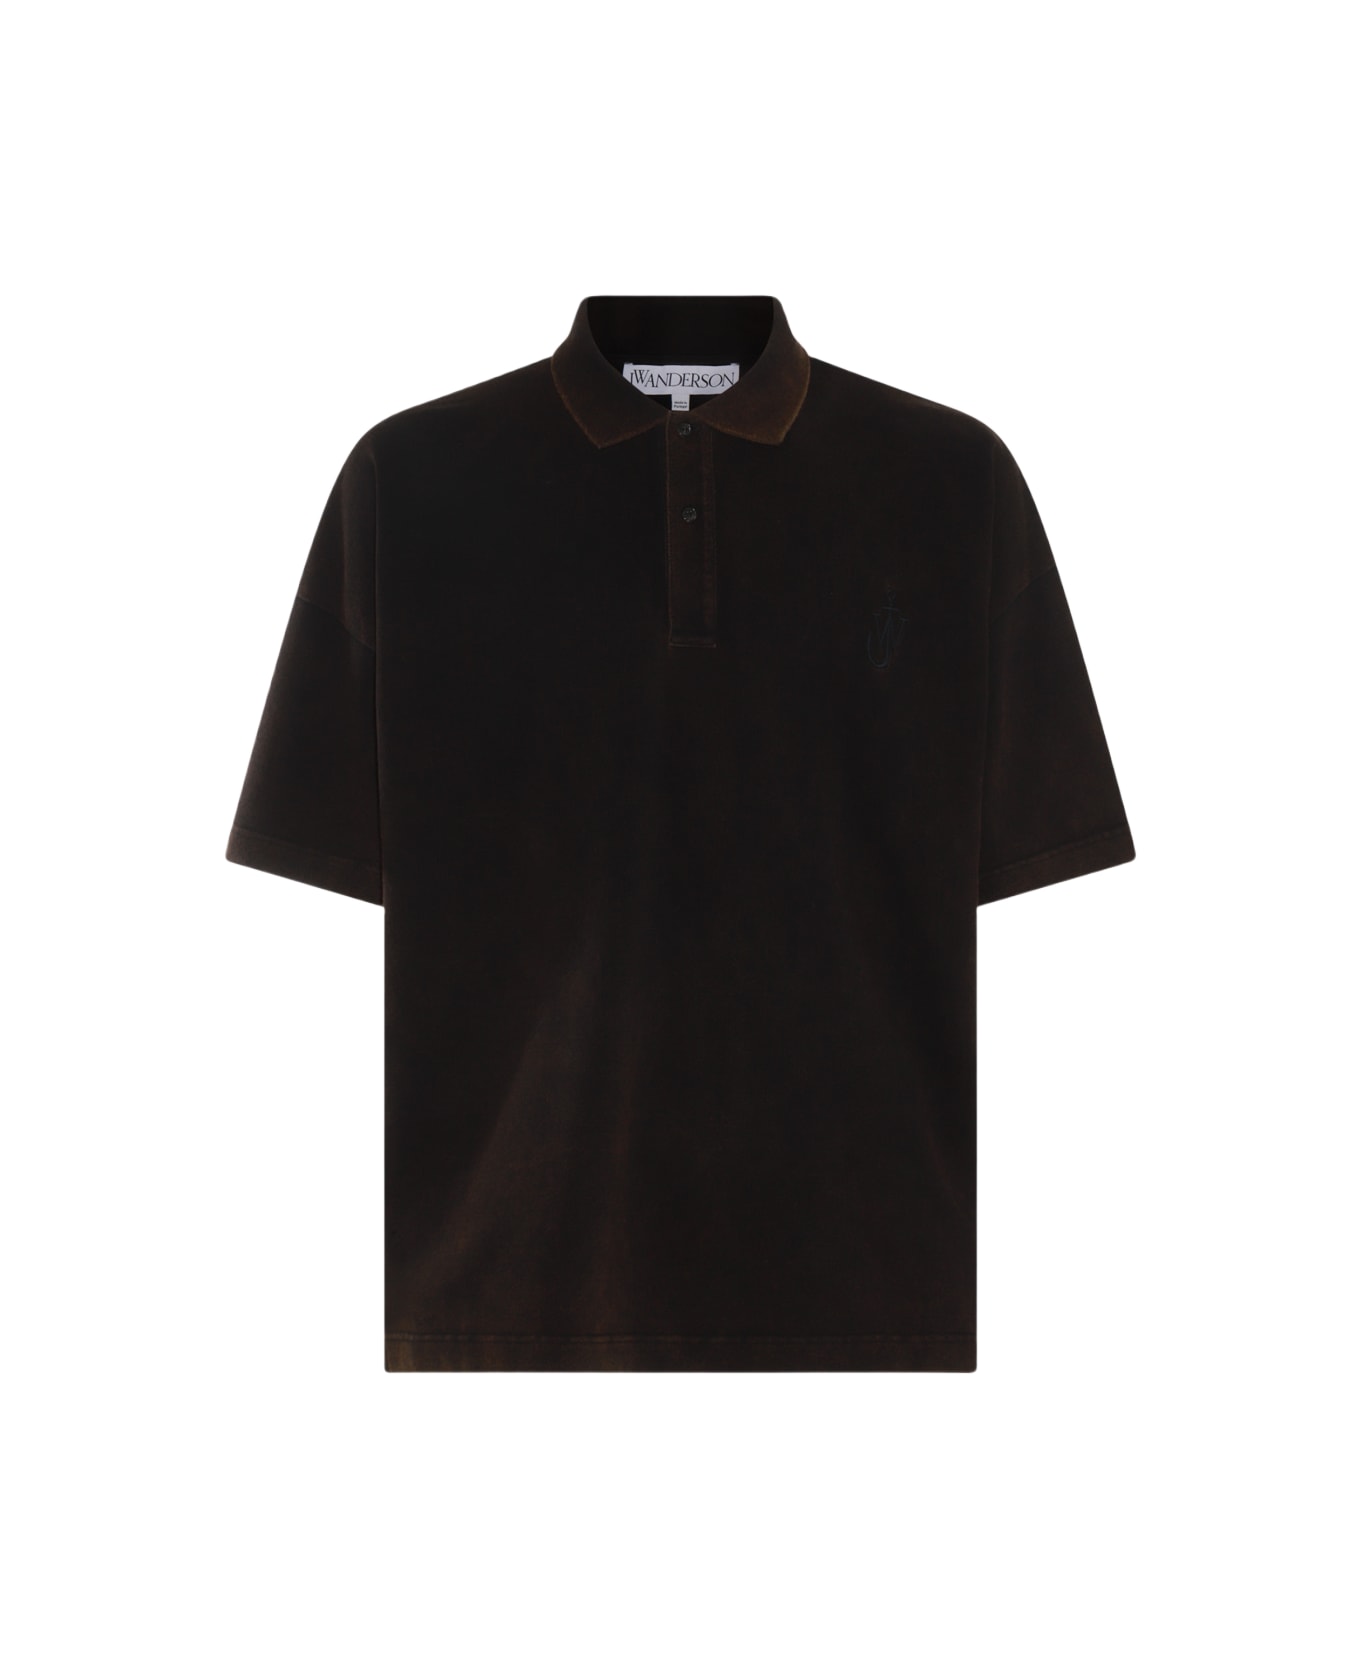 J.W. Anderson Dark Brown Cotton Polo Shirt - Brown